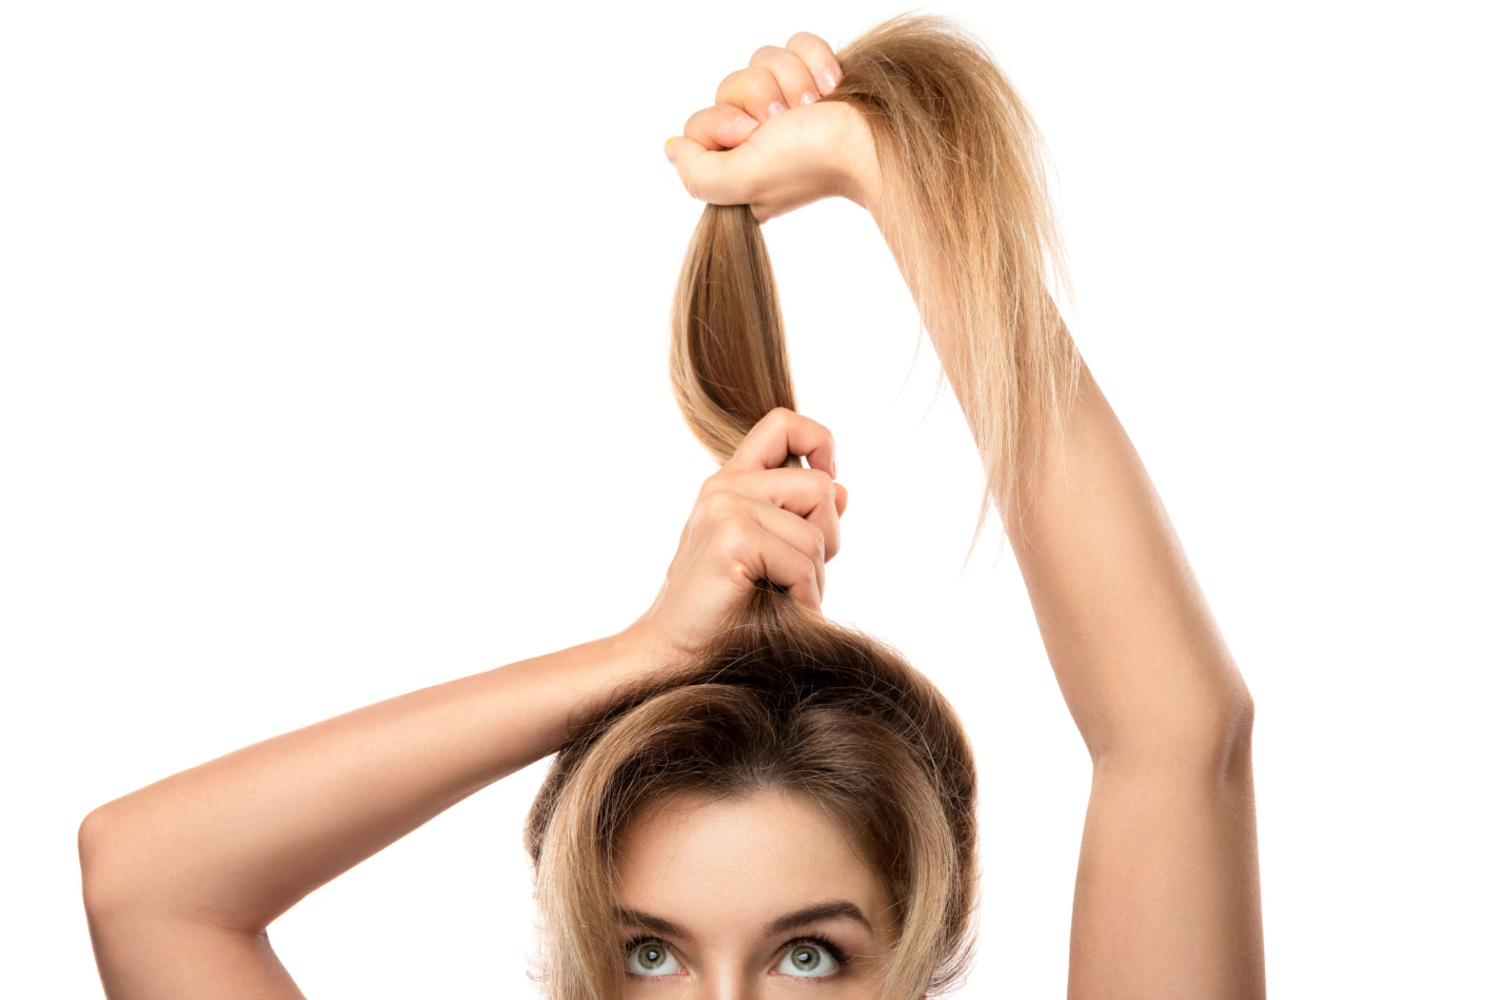 Does Biotin Make You Grow Hair Faster?